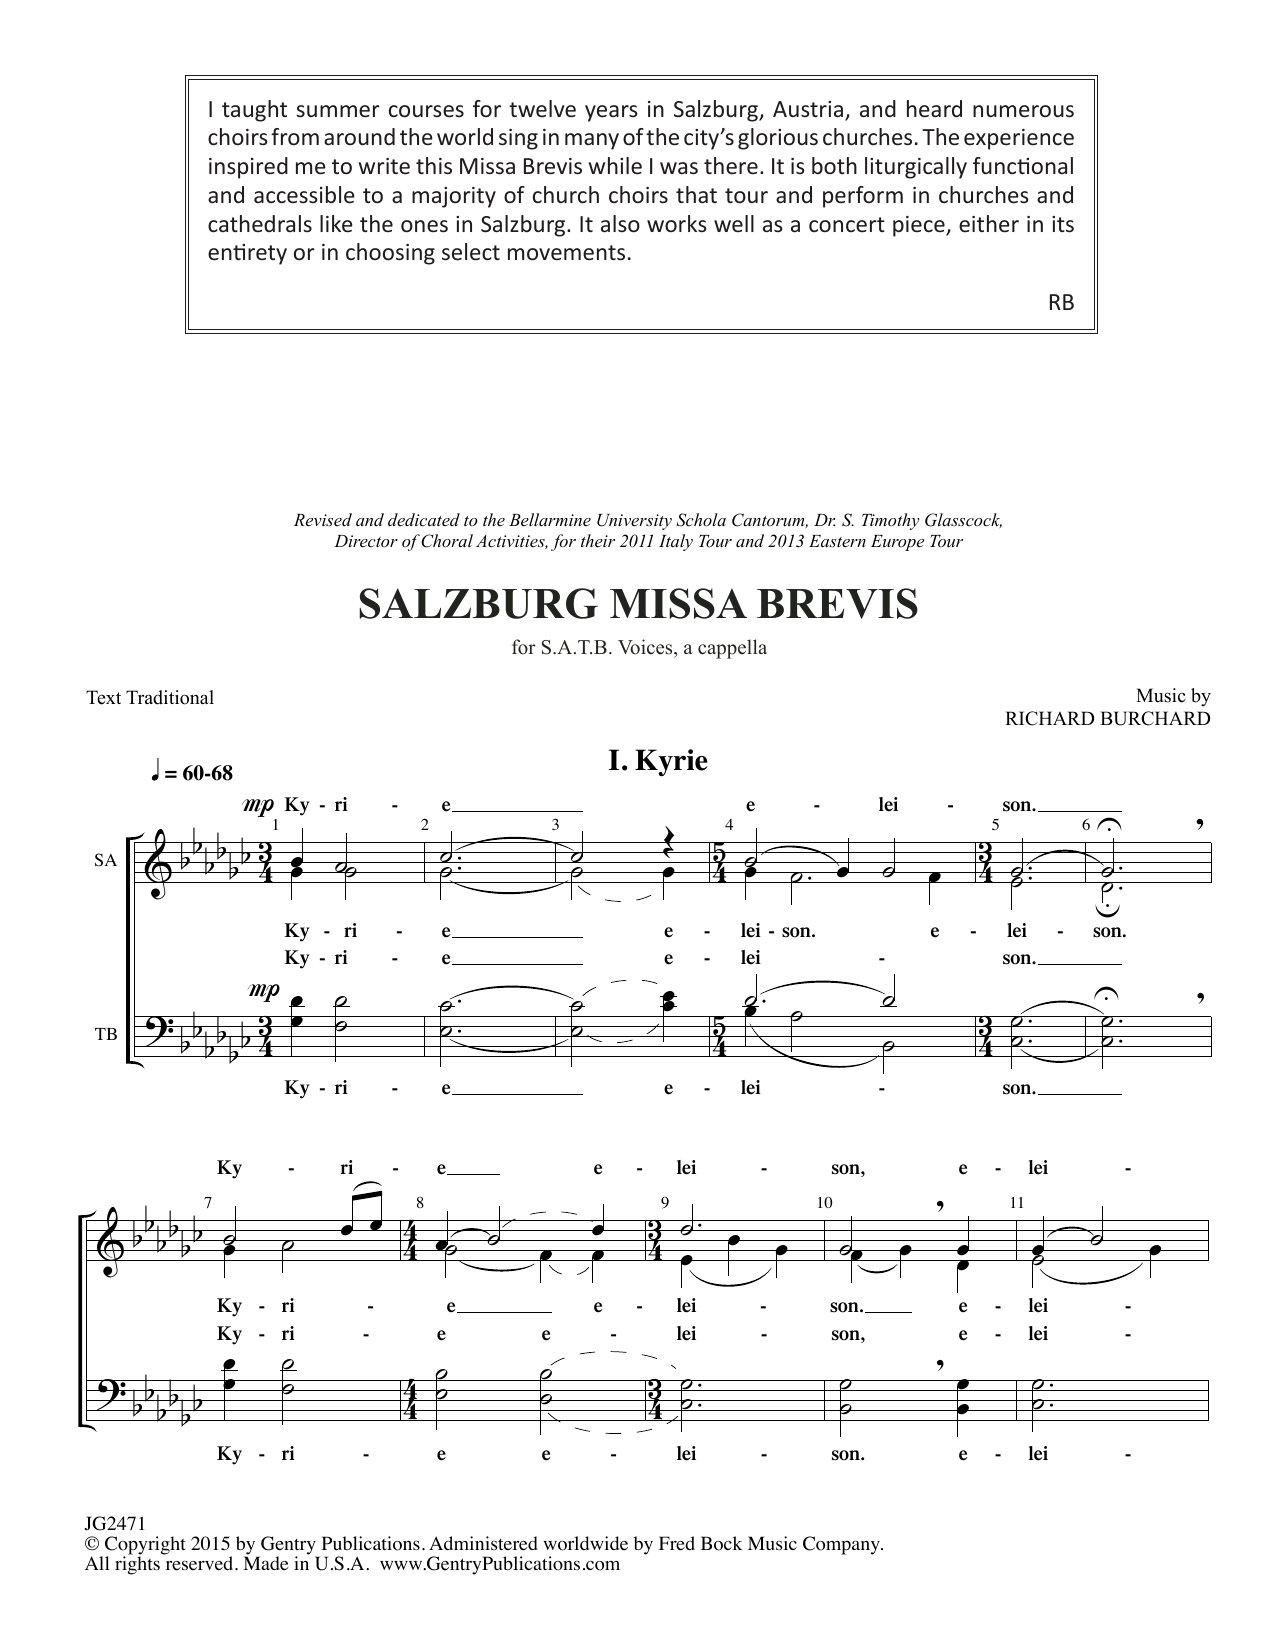 Richard Burchard Salzburg Missa Brevis Sheet Music Notes & Chords for SATB Choir - Download or Print PDF